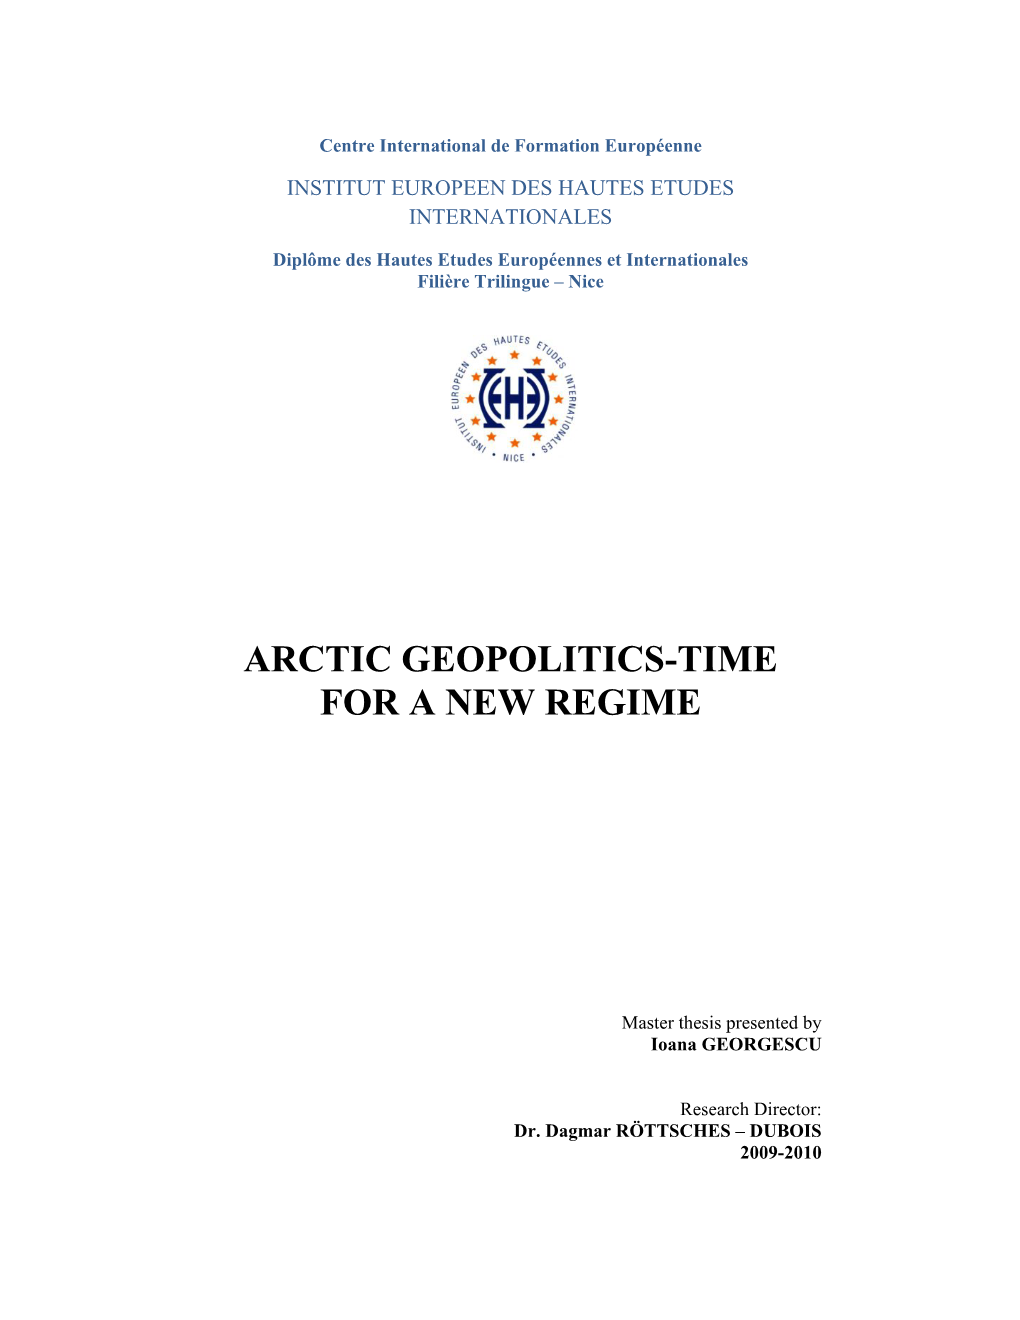 Arctic Geopolitics-Time for a New Regime